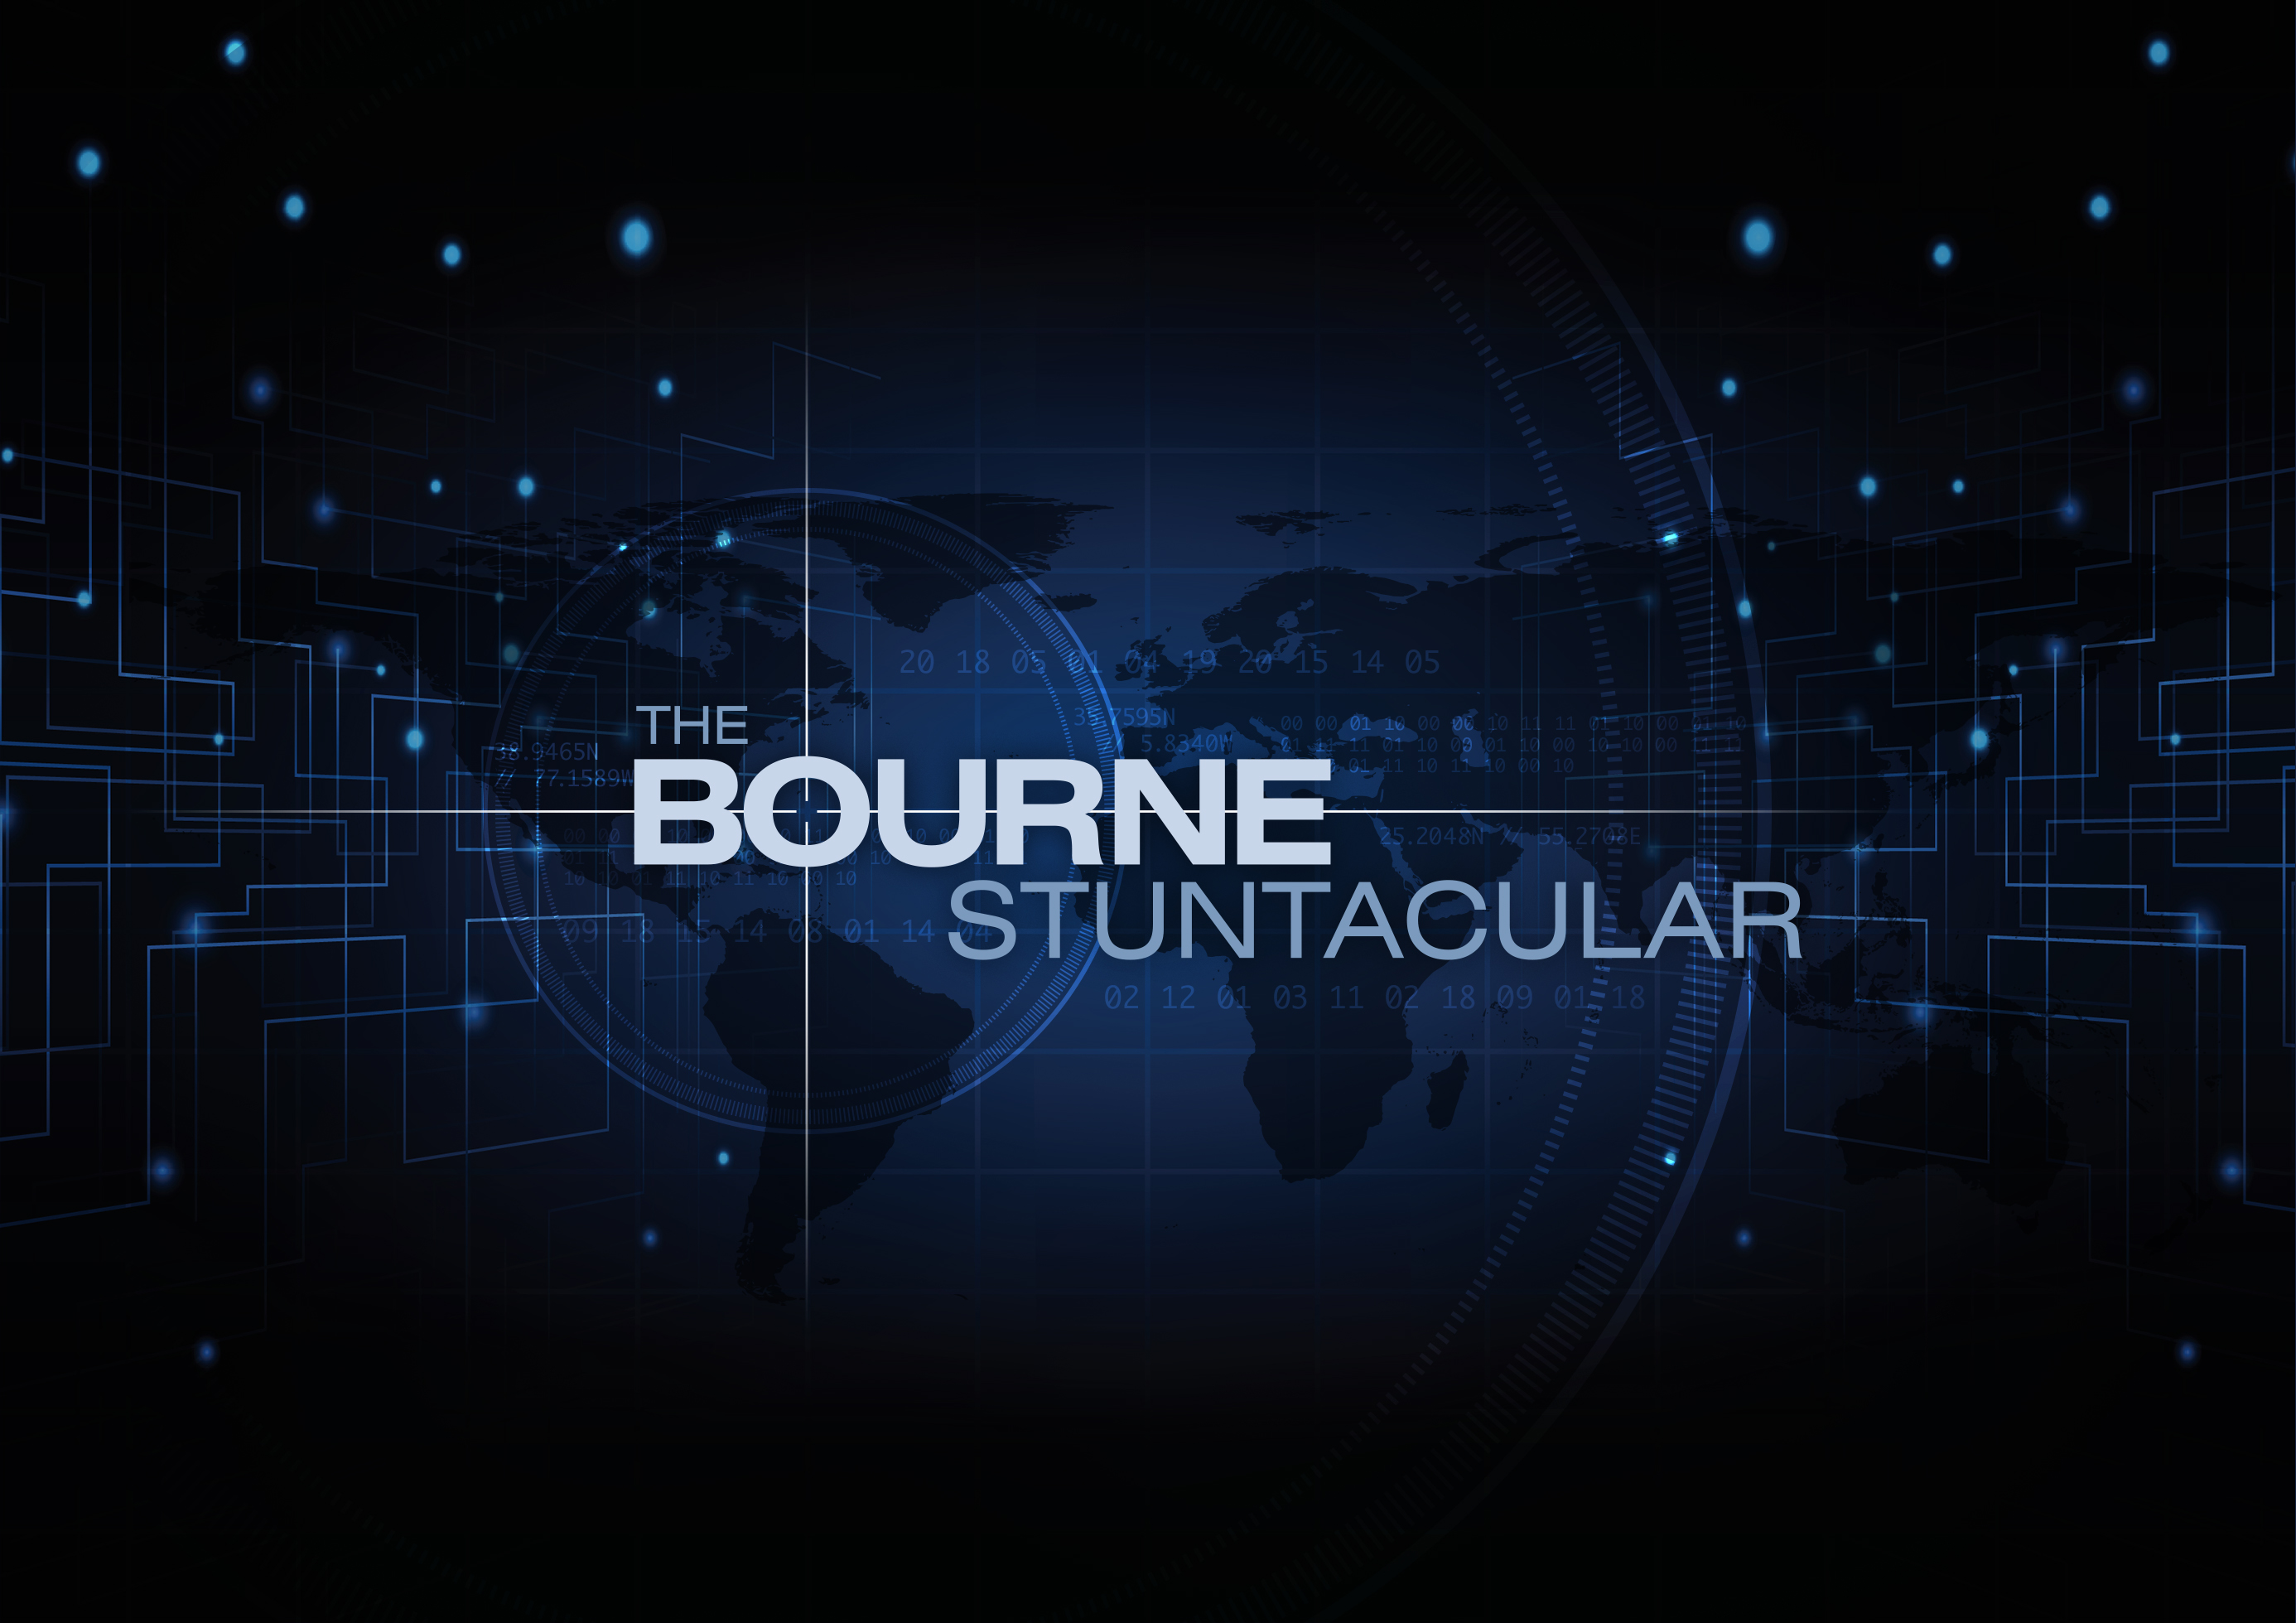 Universal Orlando Resort to Debut The Bourne Stuntacular in Spring 2020